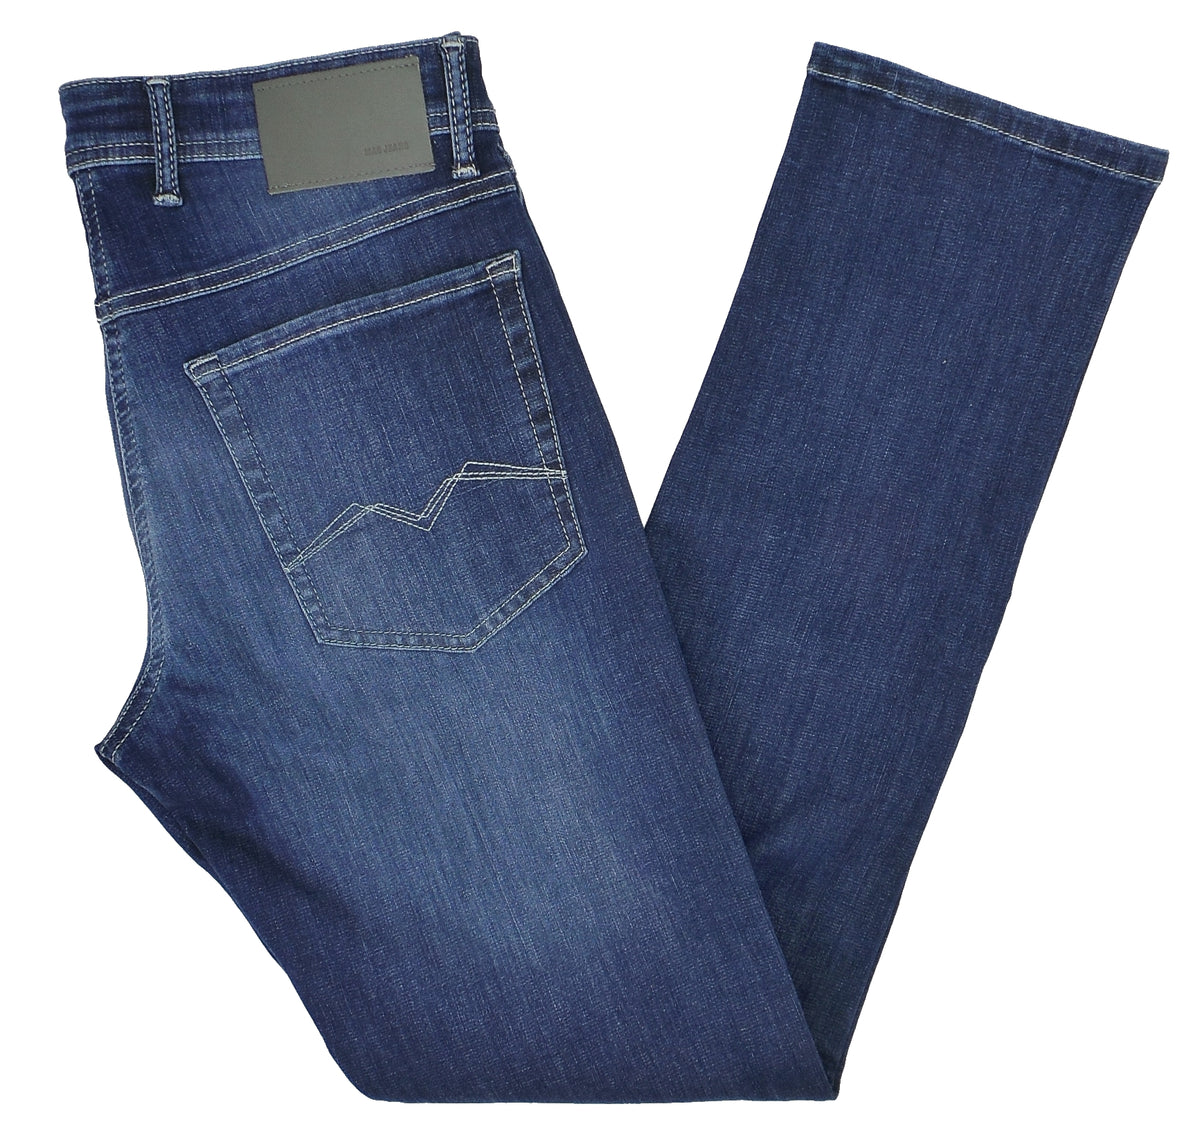 Jeans Company MAC Seattle – Thread